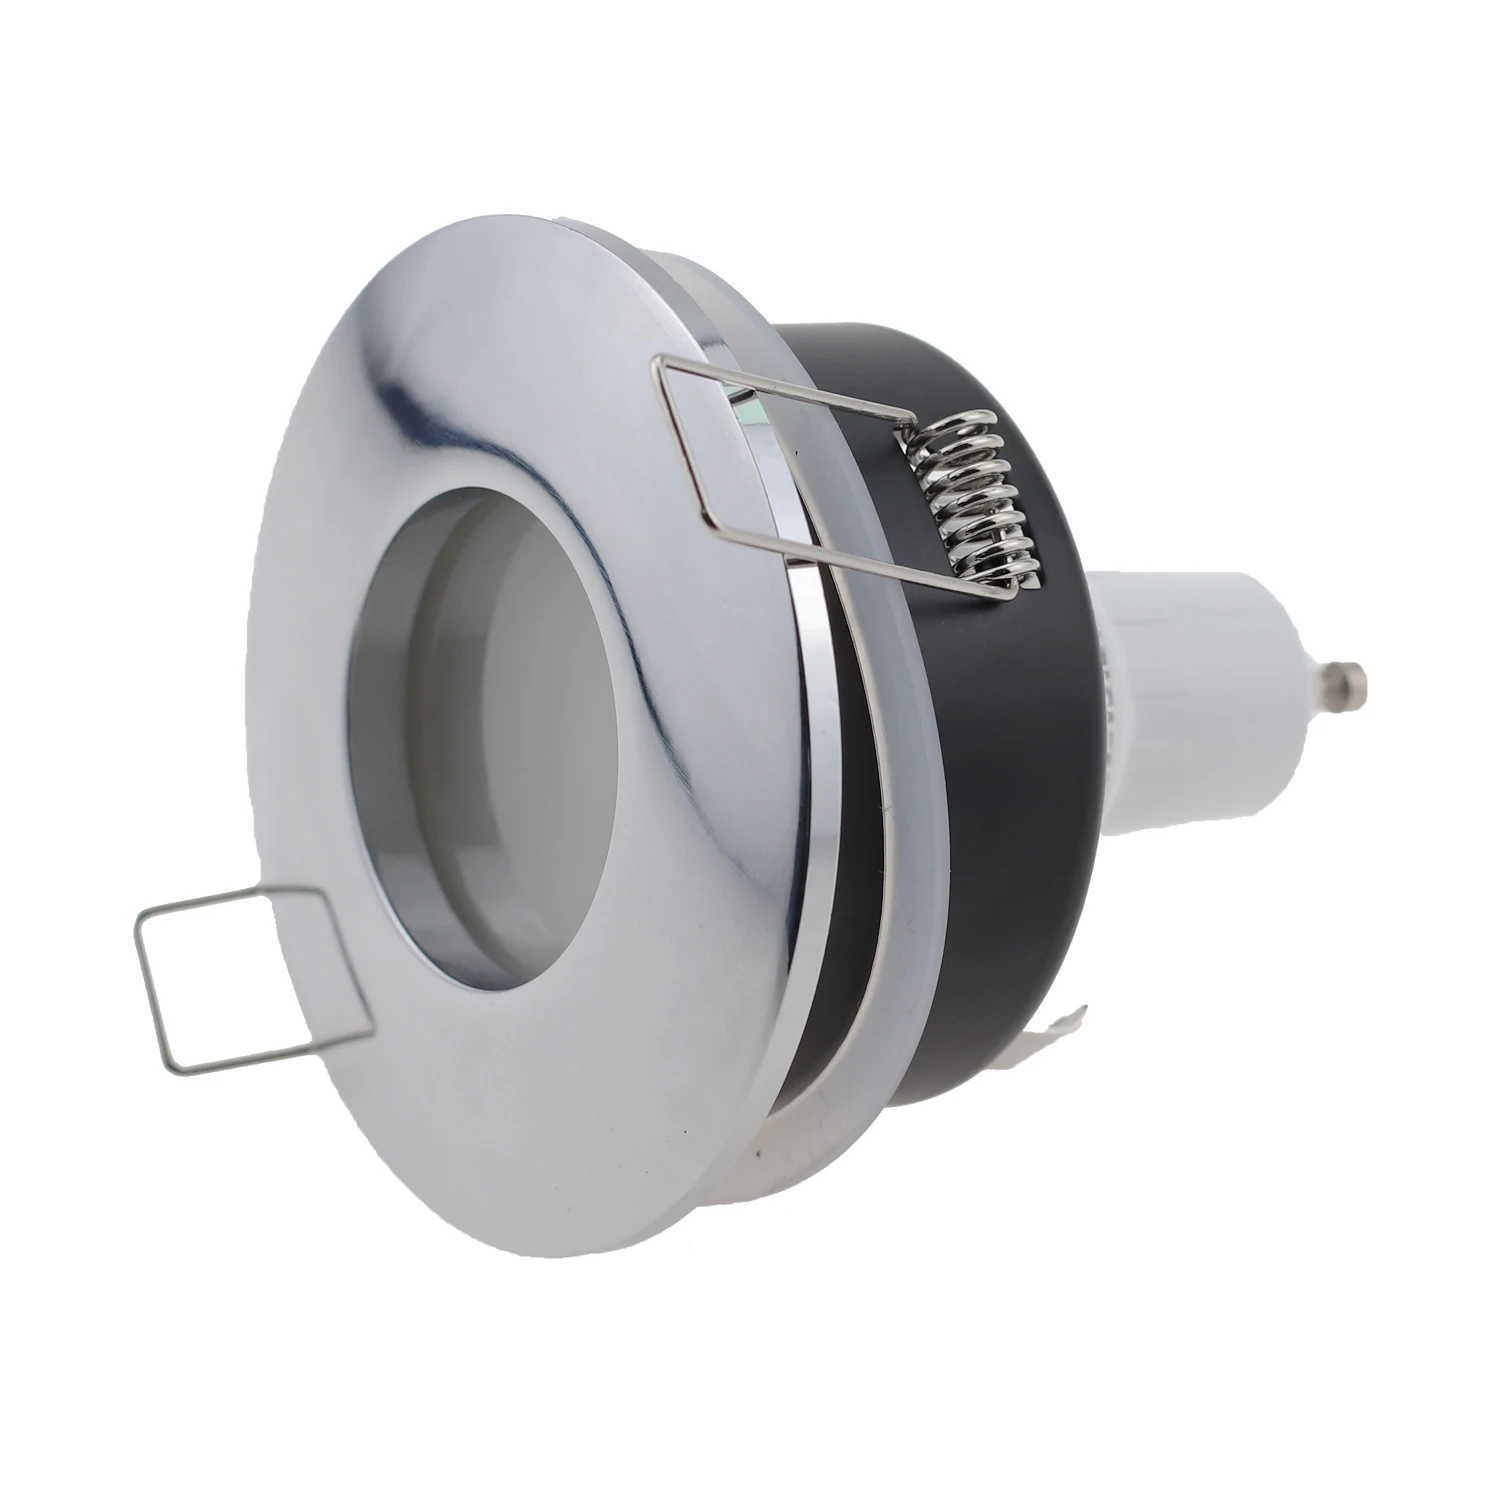 Accesorio de globo ocular LED con lente de vidrio, carcasa de foco empotrado, Bola de ojo descendente, marco de ajuste, lámpara de seda, IP65